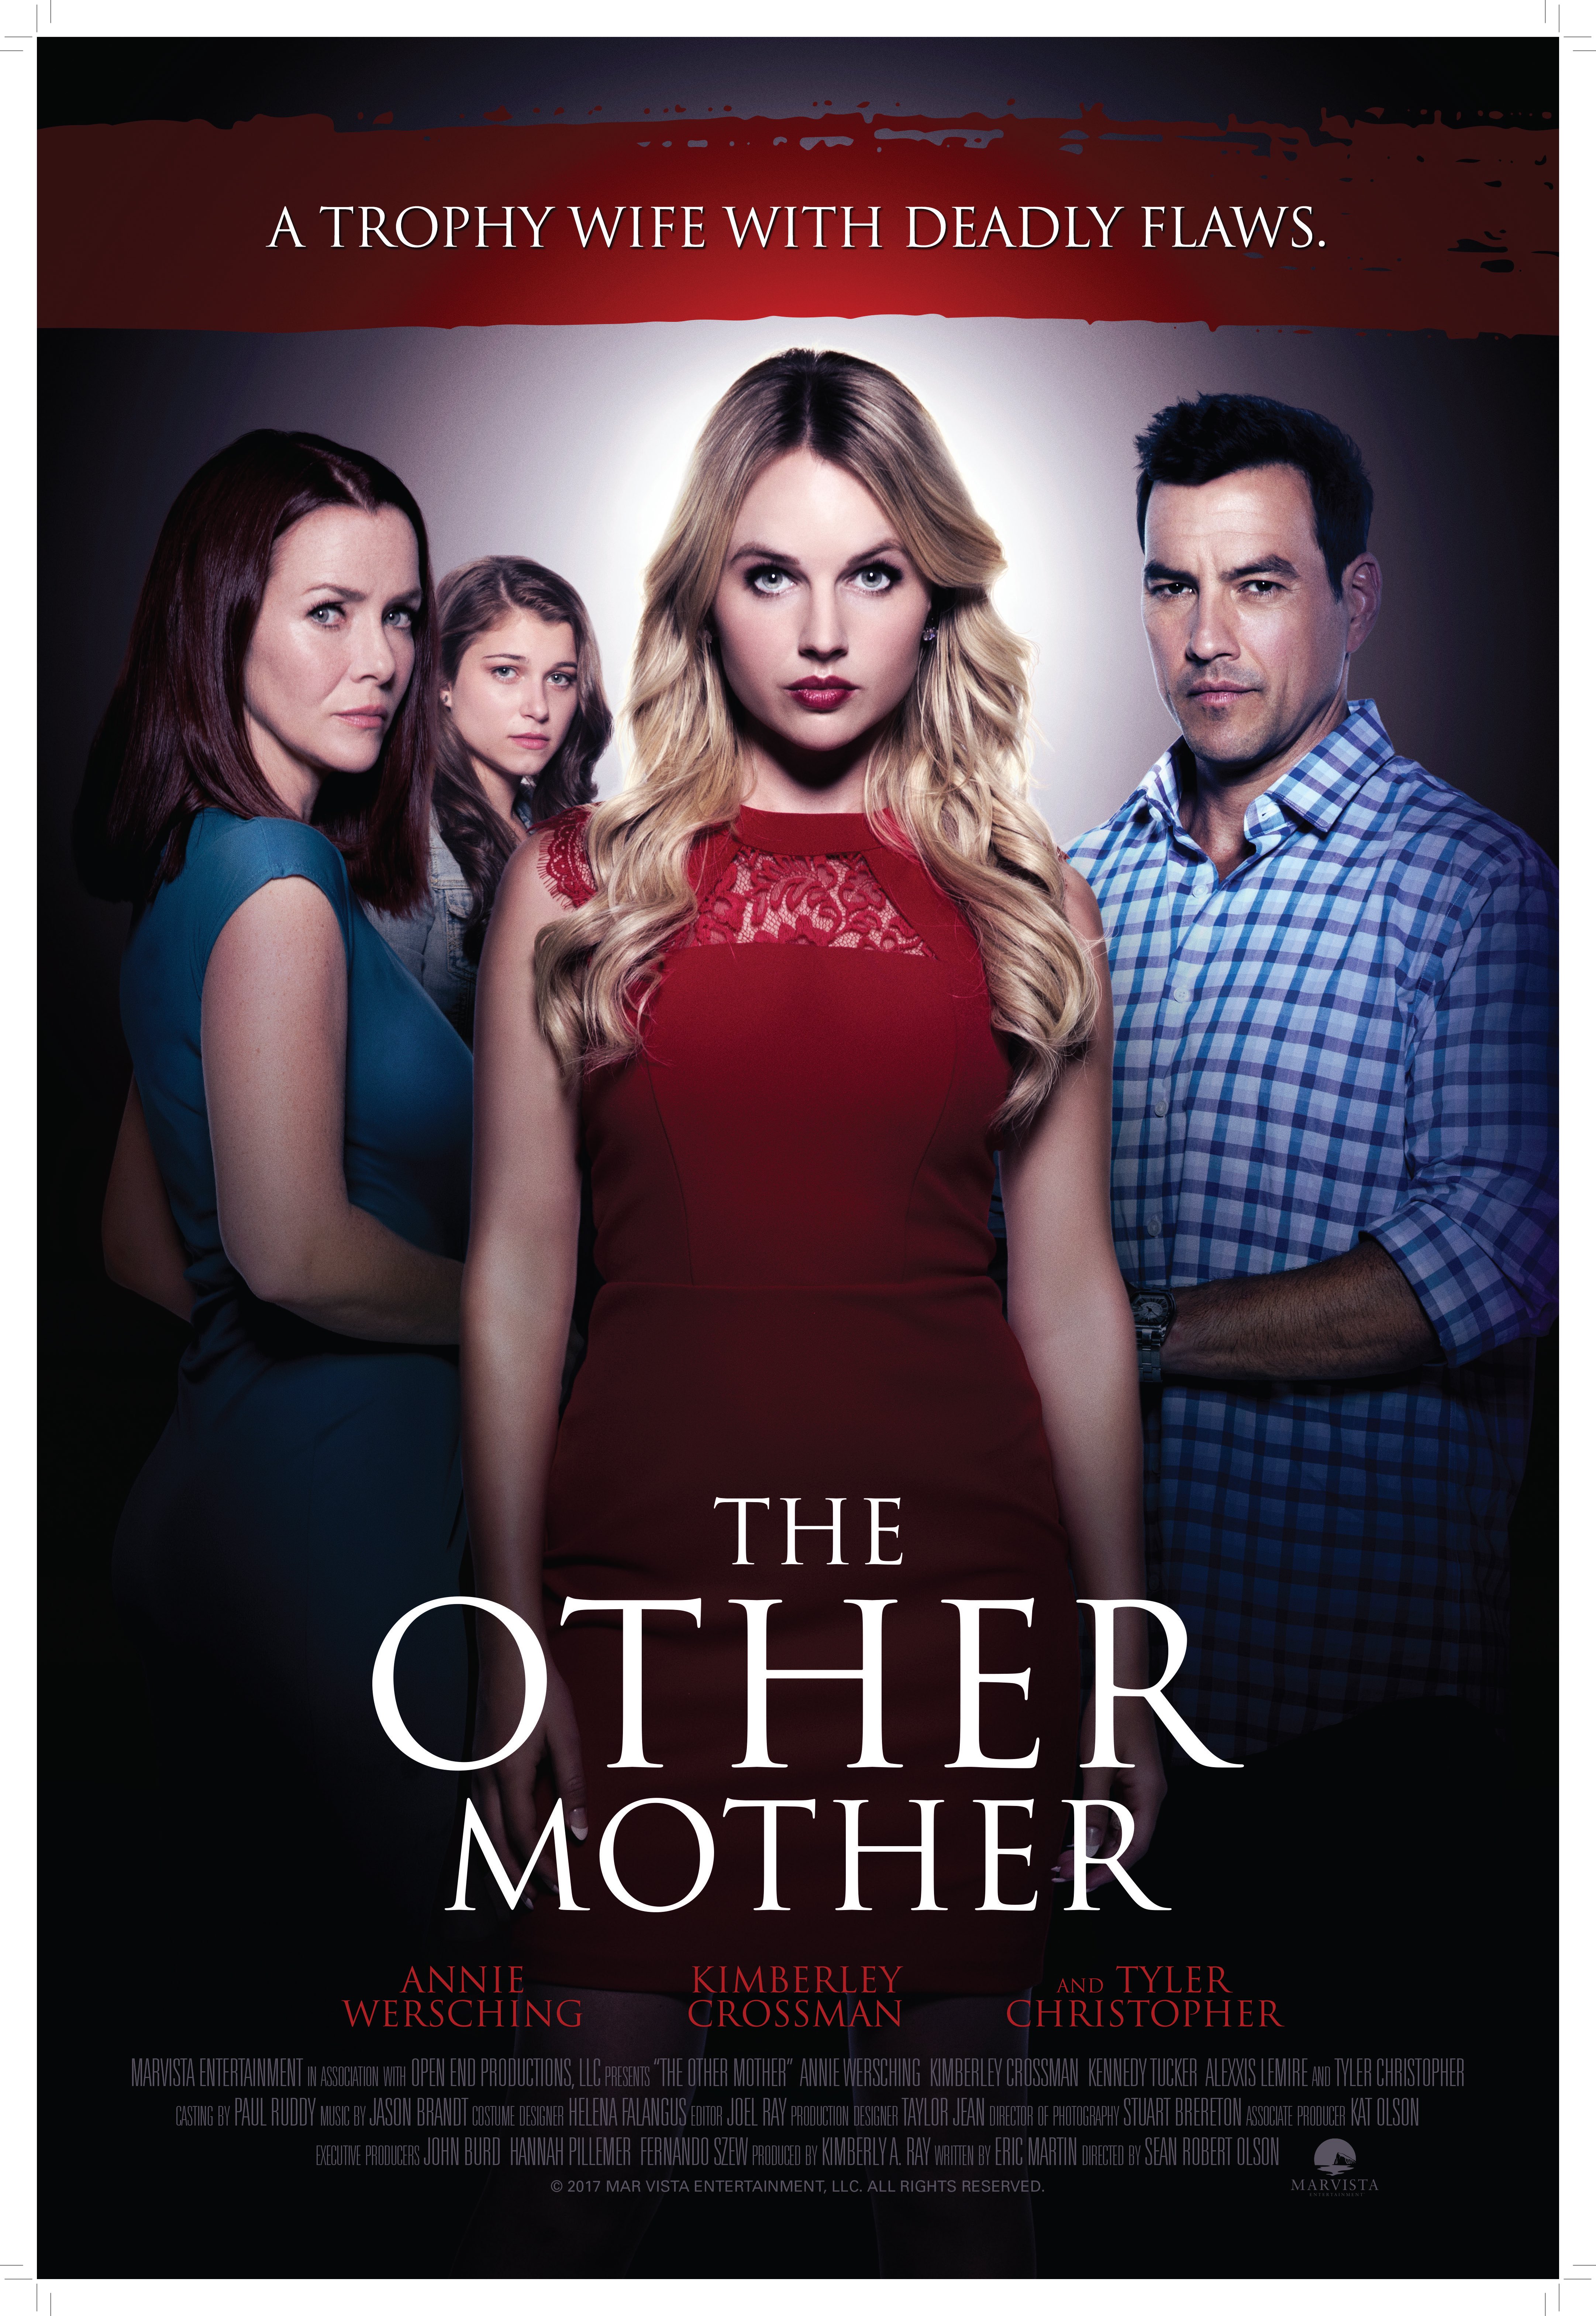 Nonton film The Other Mother layarkaca21 indoxx1 ganool online streaming terbaru